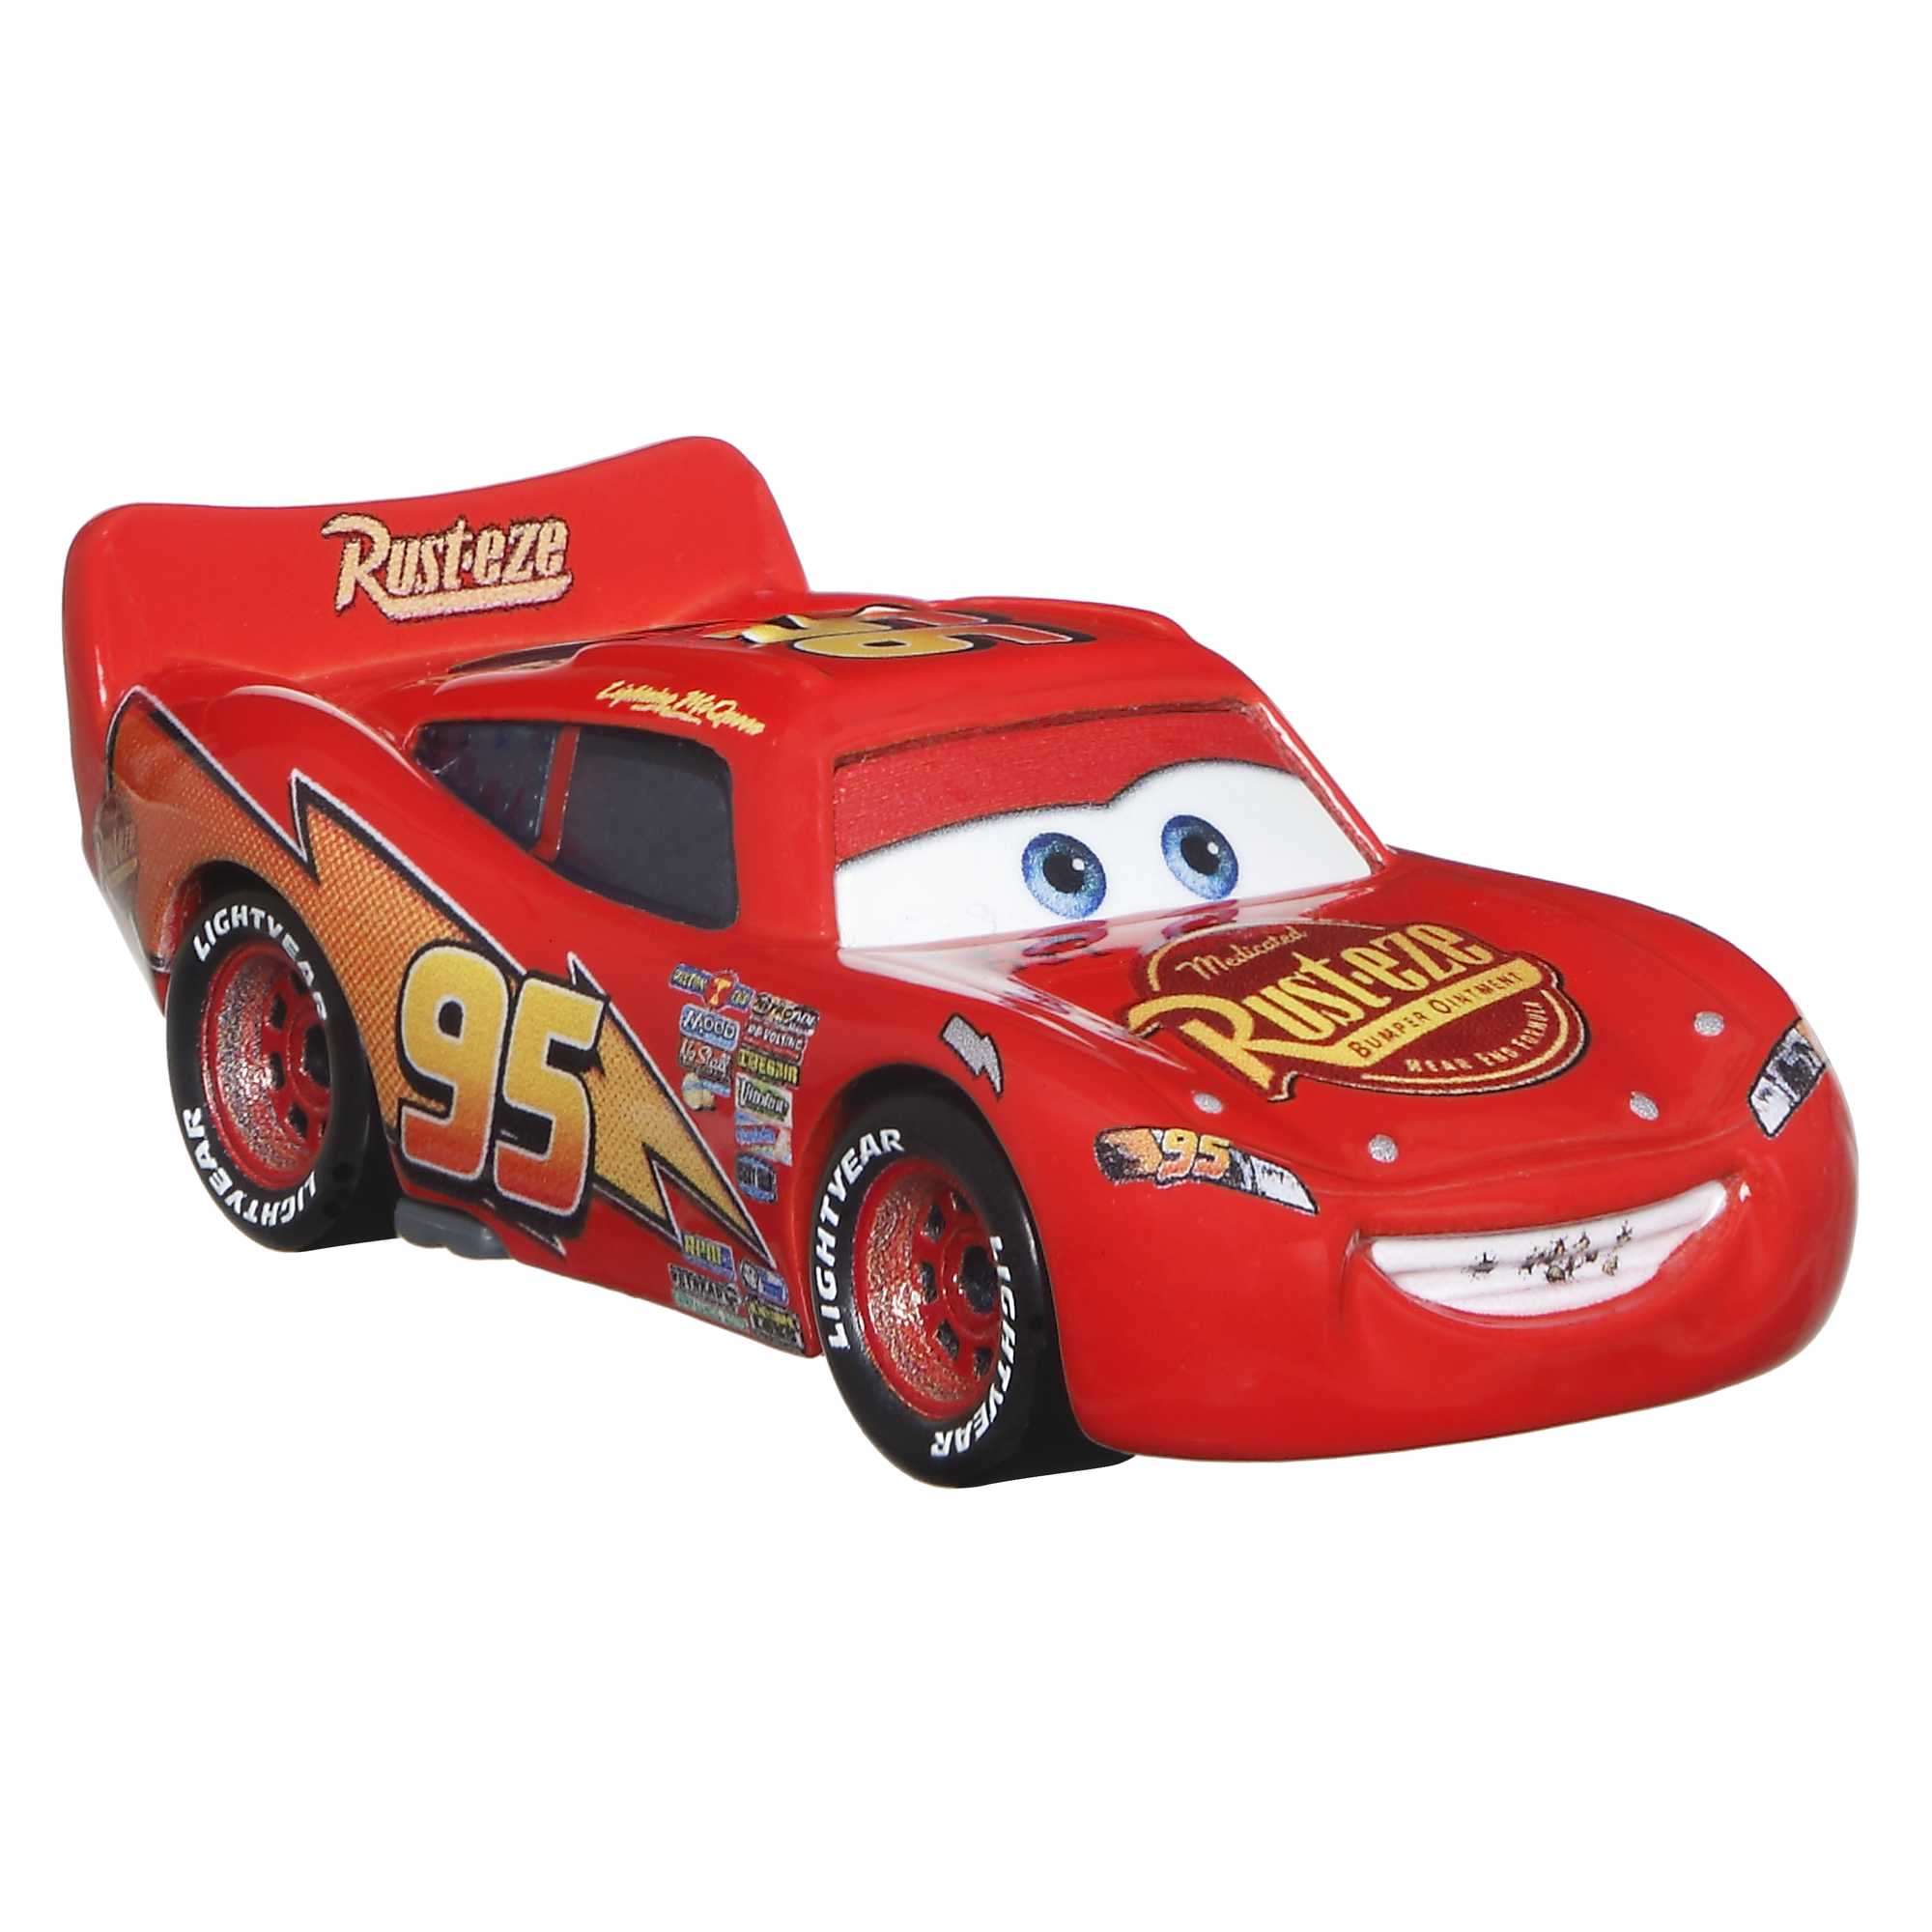 Cars Disney pixar voiture jouet